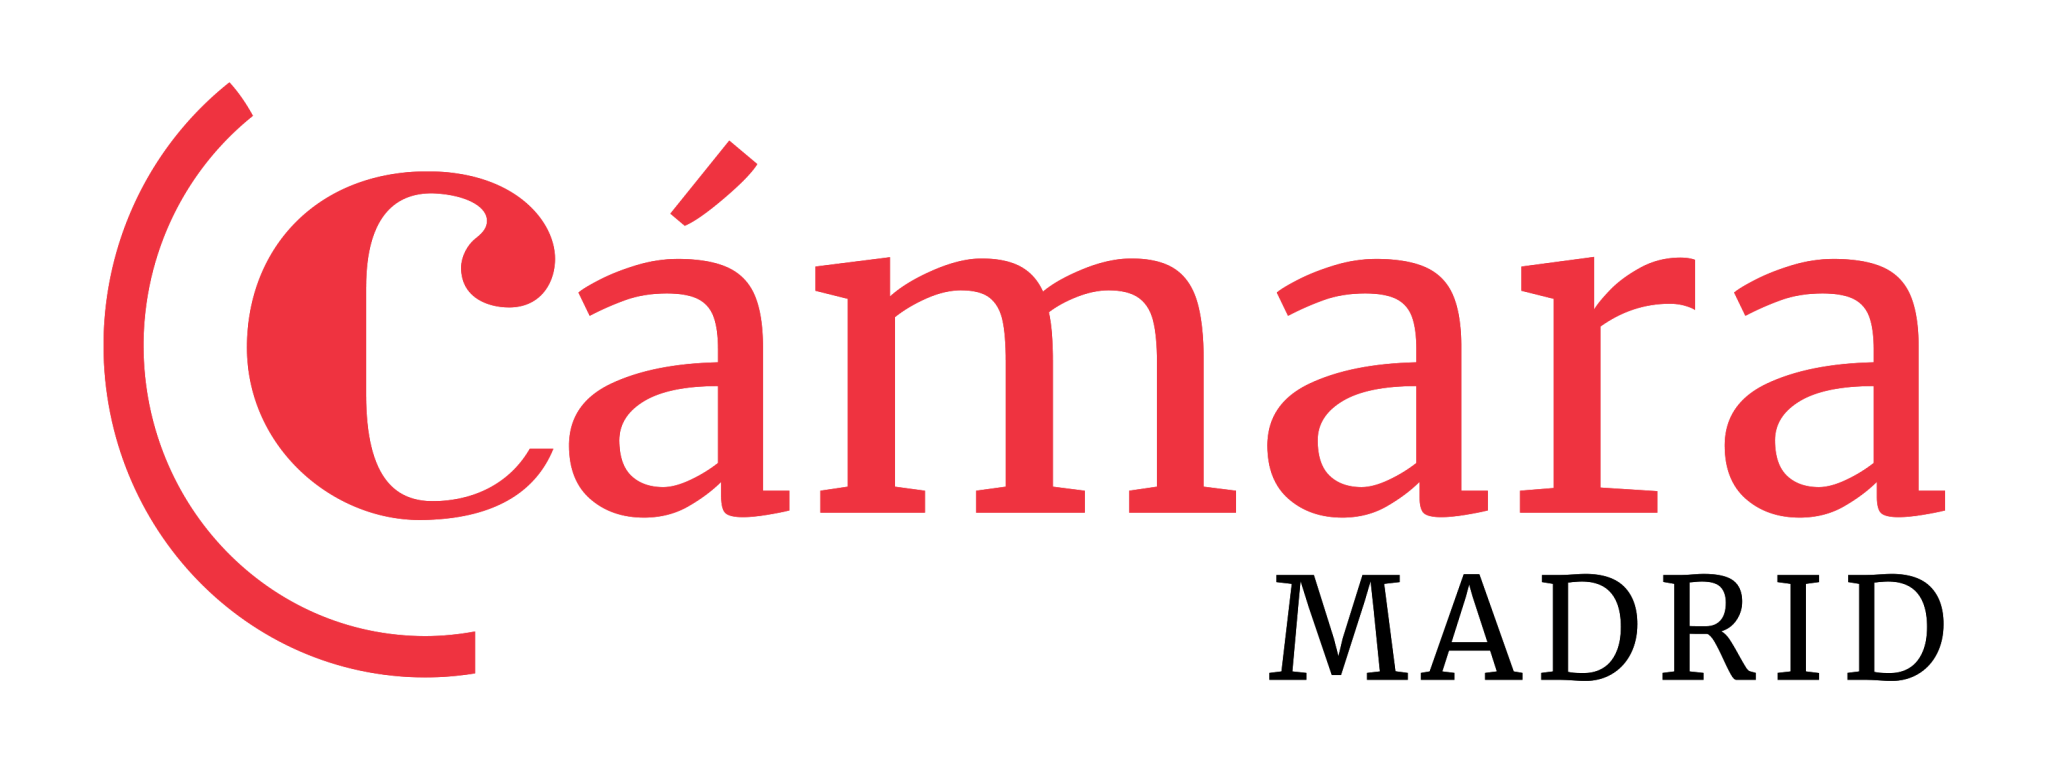 Logo CamaraMadrid RGB 1